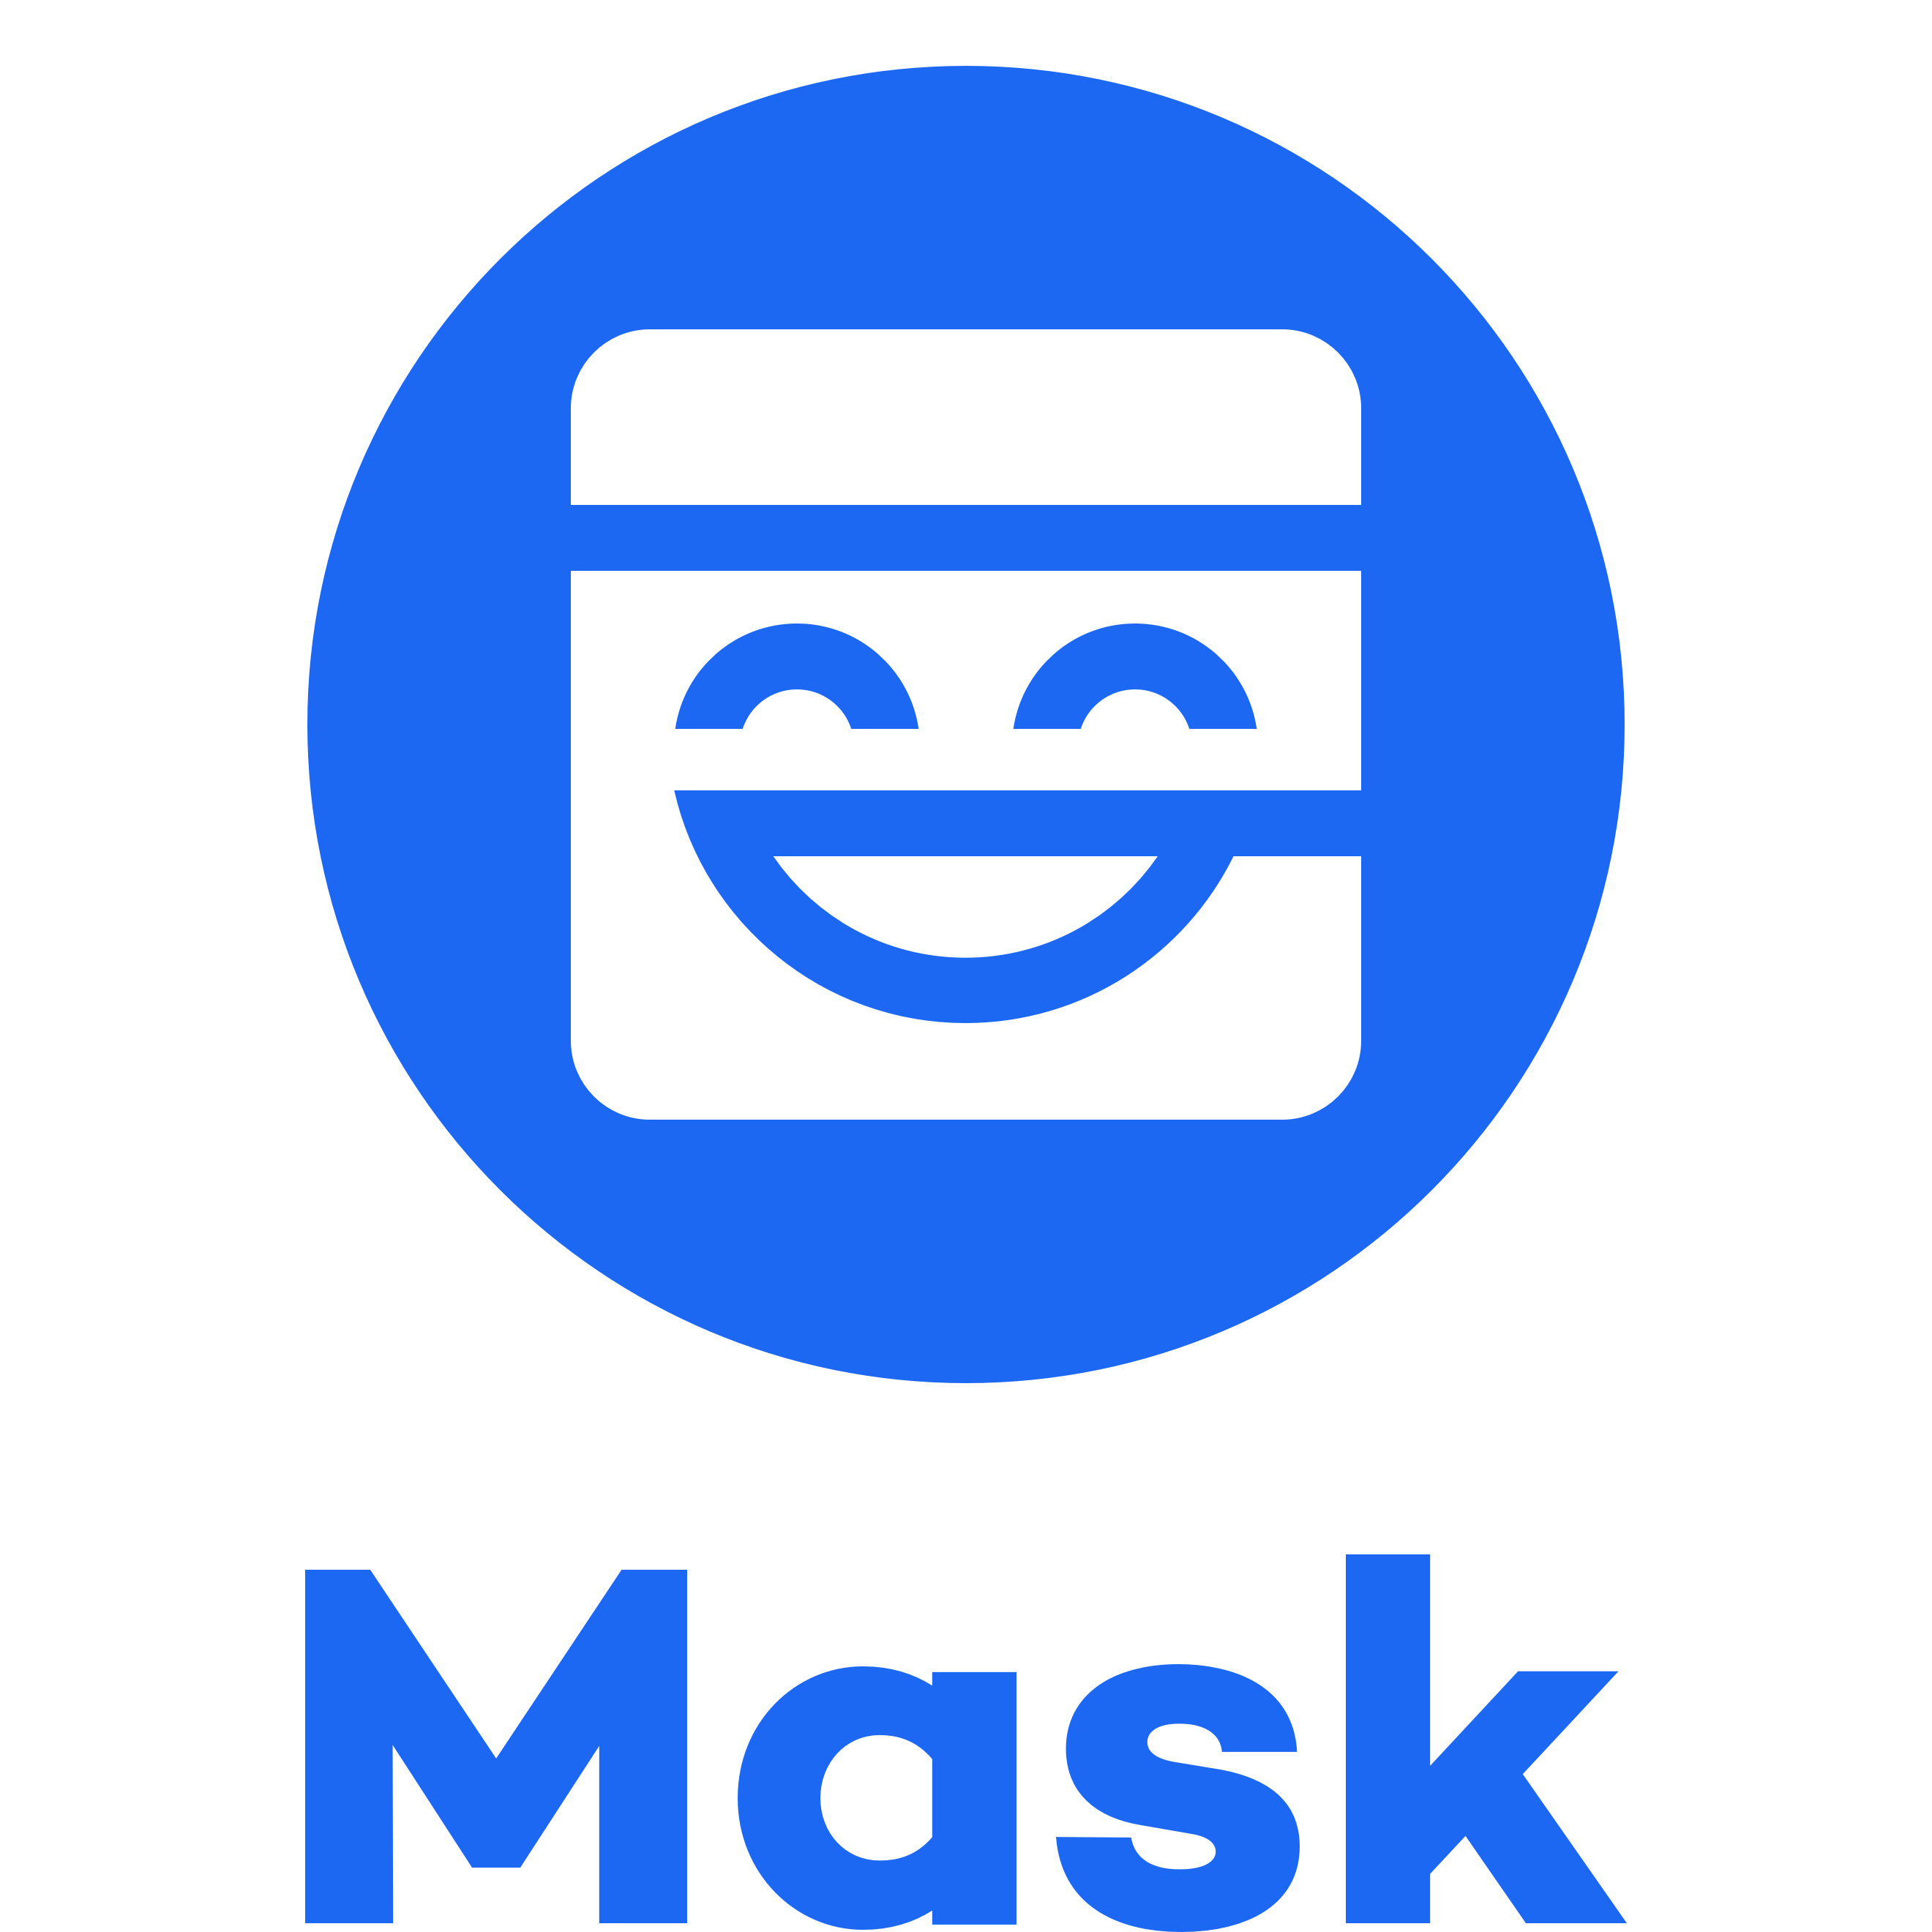 Mask Network